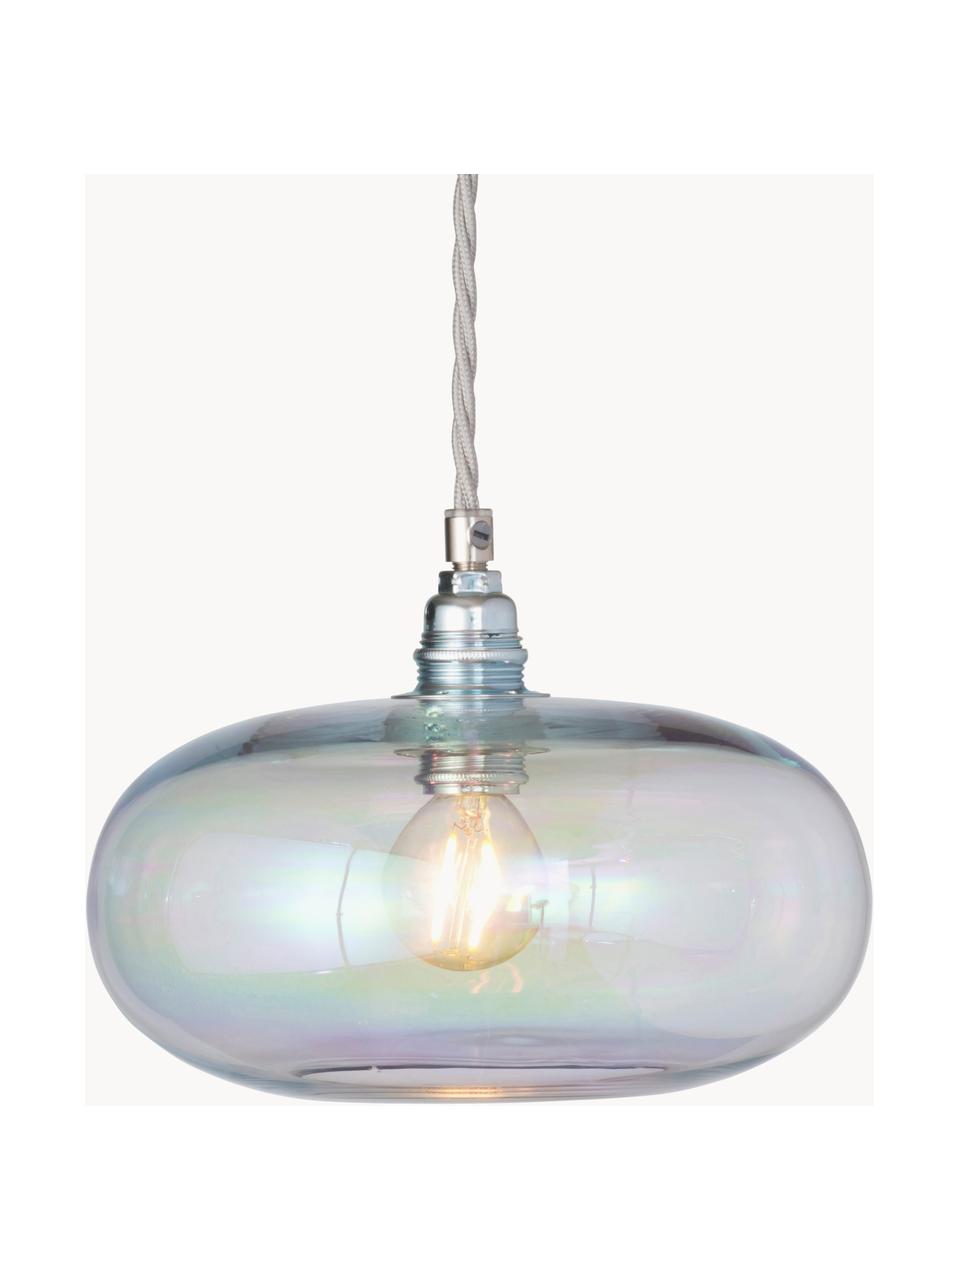 Kleine hanglamp Horizon, mondgeblazen, Lampenkap: mondgeblazen glas, Iriserend, zilverkleurig, Ø 21 x H 14 cm